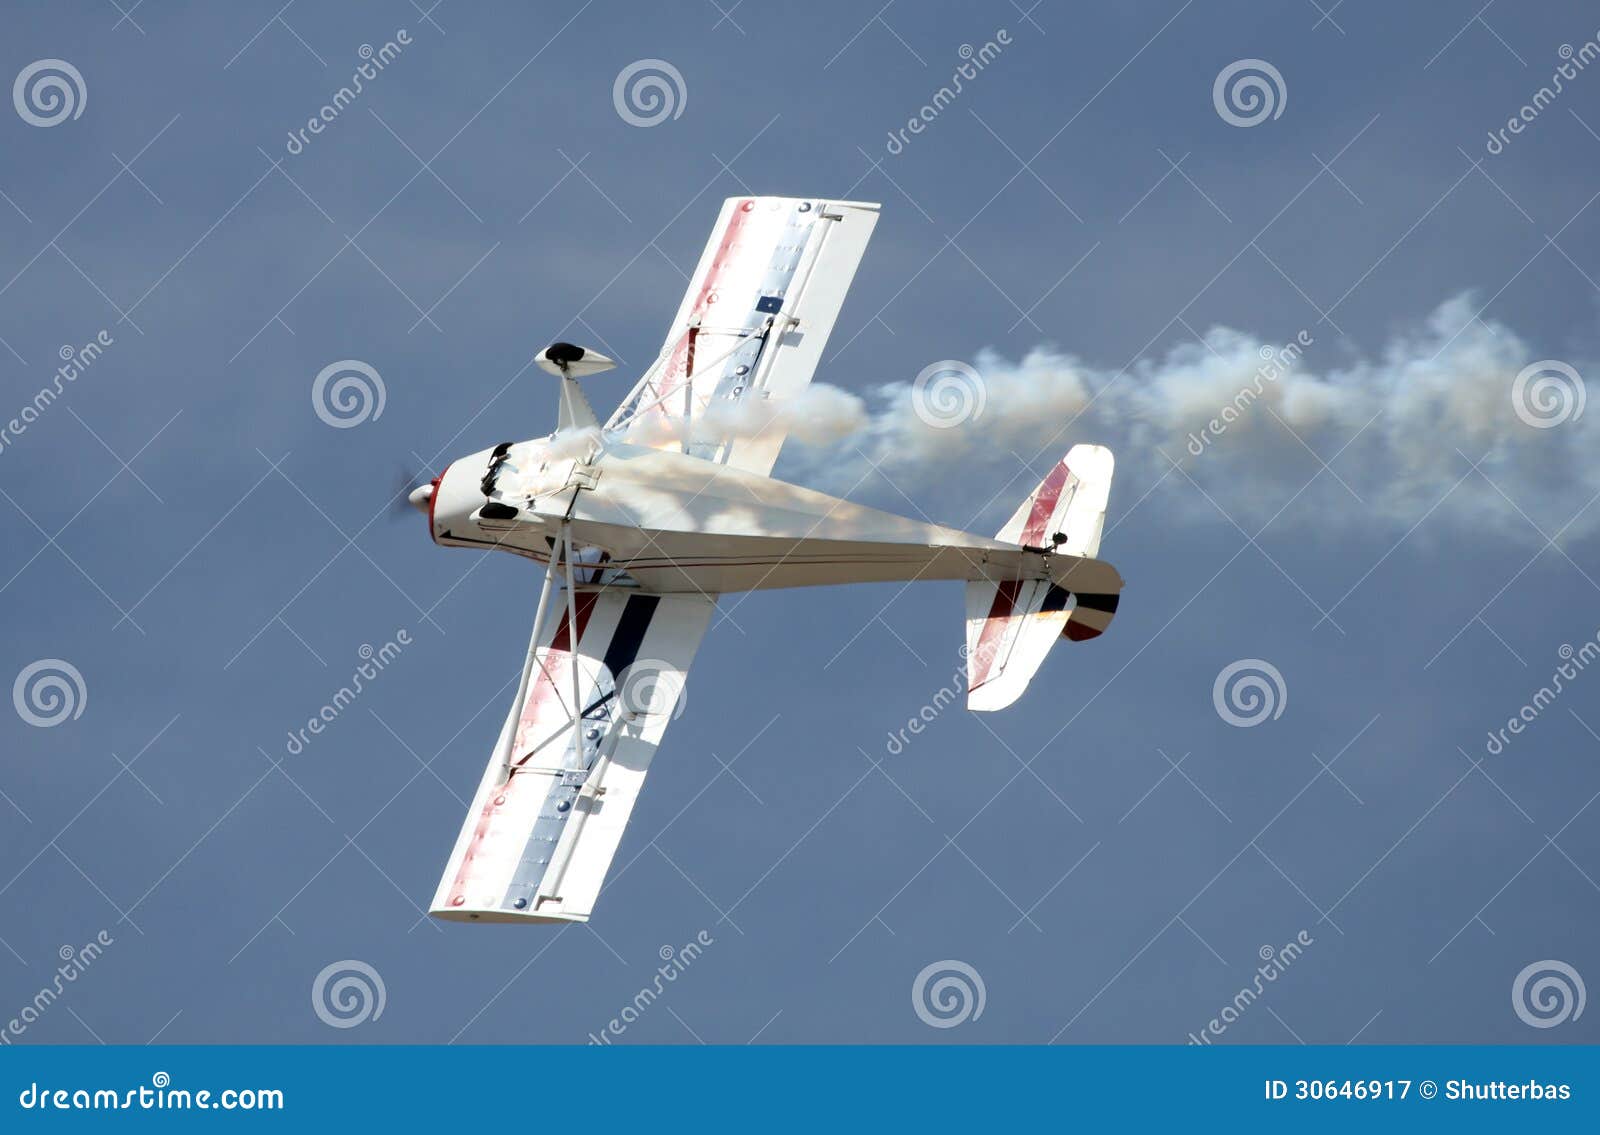 aerobatics plane